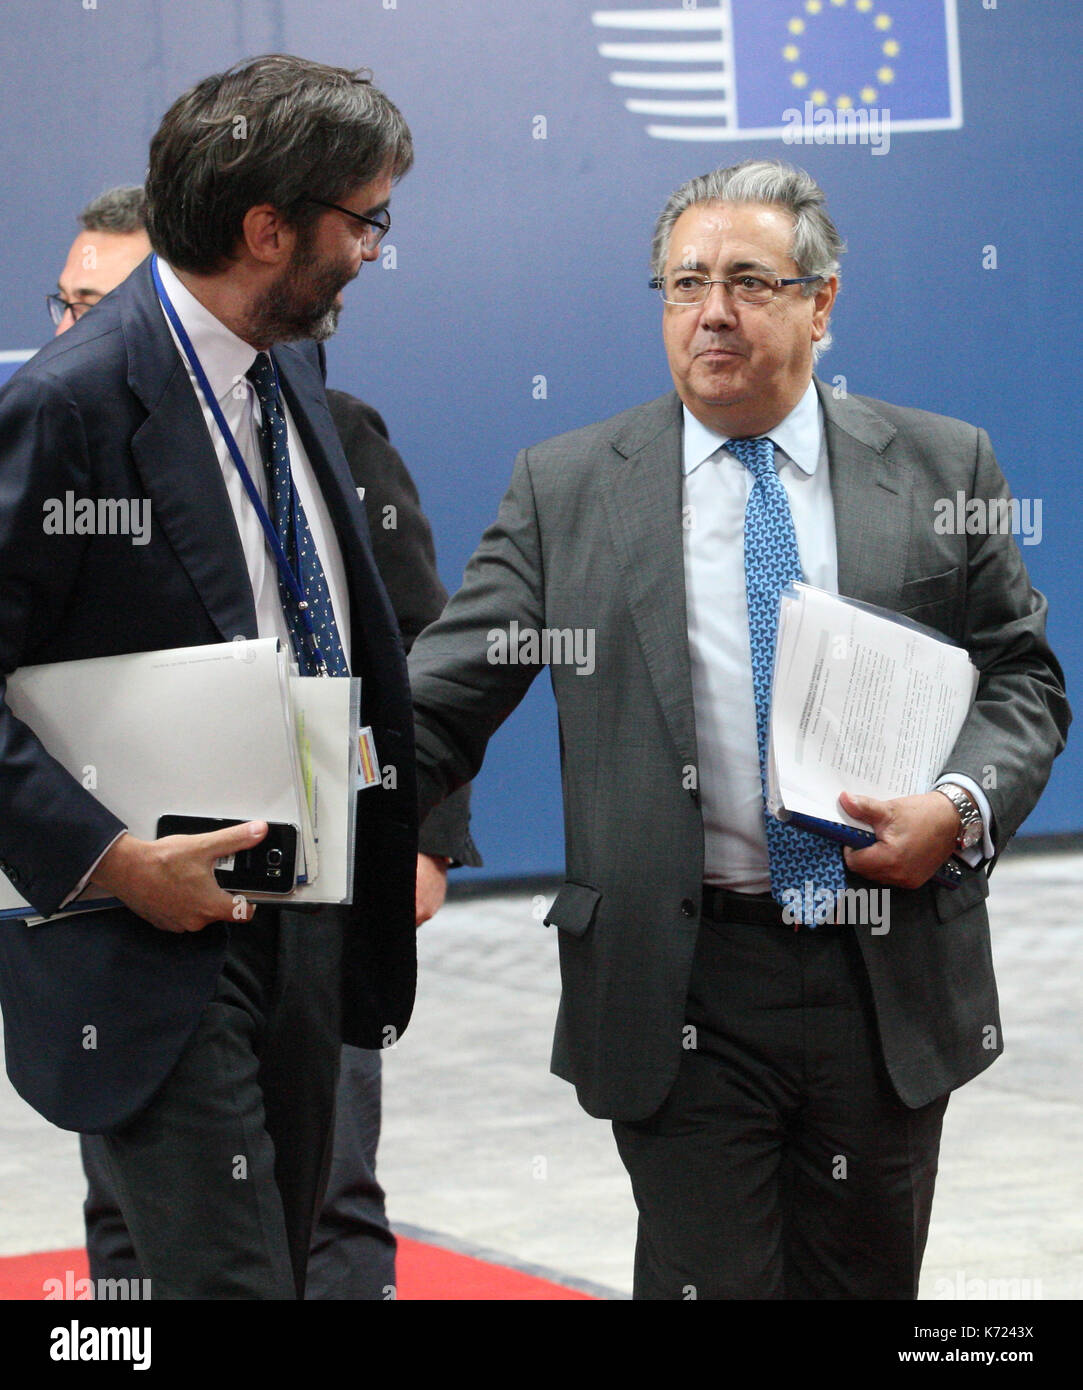 Brussels, Belgium. 14th Sep, 2017. Juan Ignacio Zoido to right Minister for the Interior of Spain Credit: Leo Cavallo/Alamy Live News Stock Photo